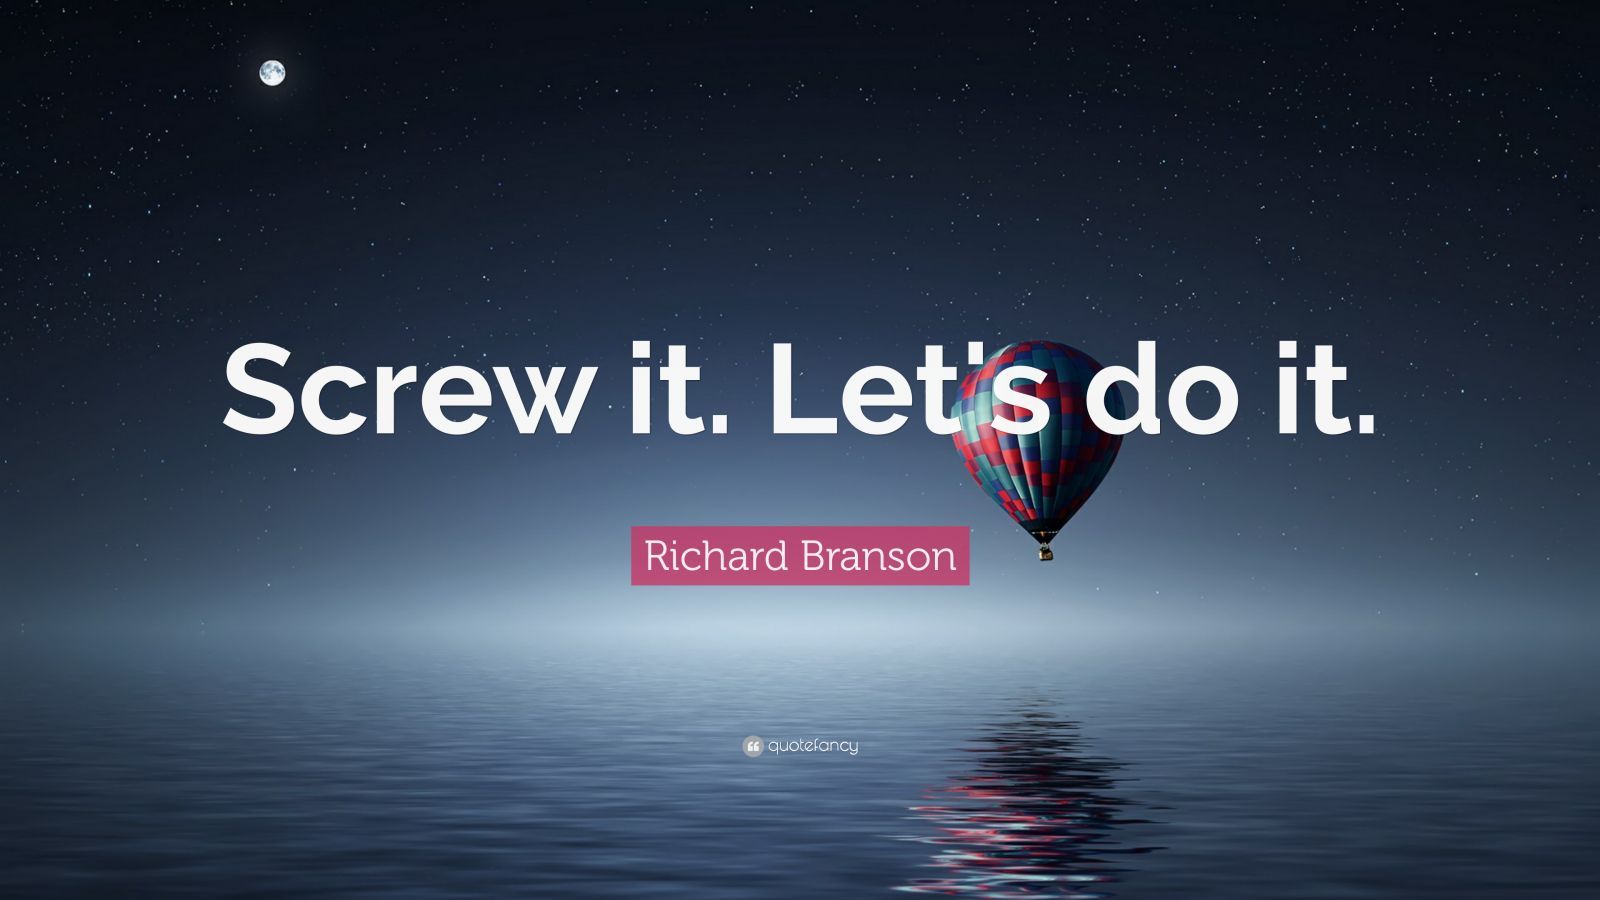 Richard Branson Quote: “Screw it. Let's do it.” (35 wallpaper)